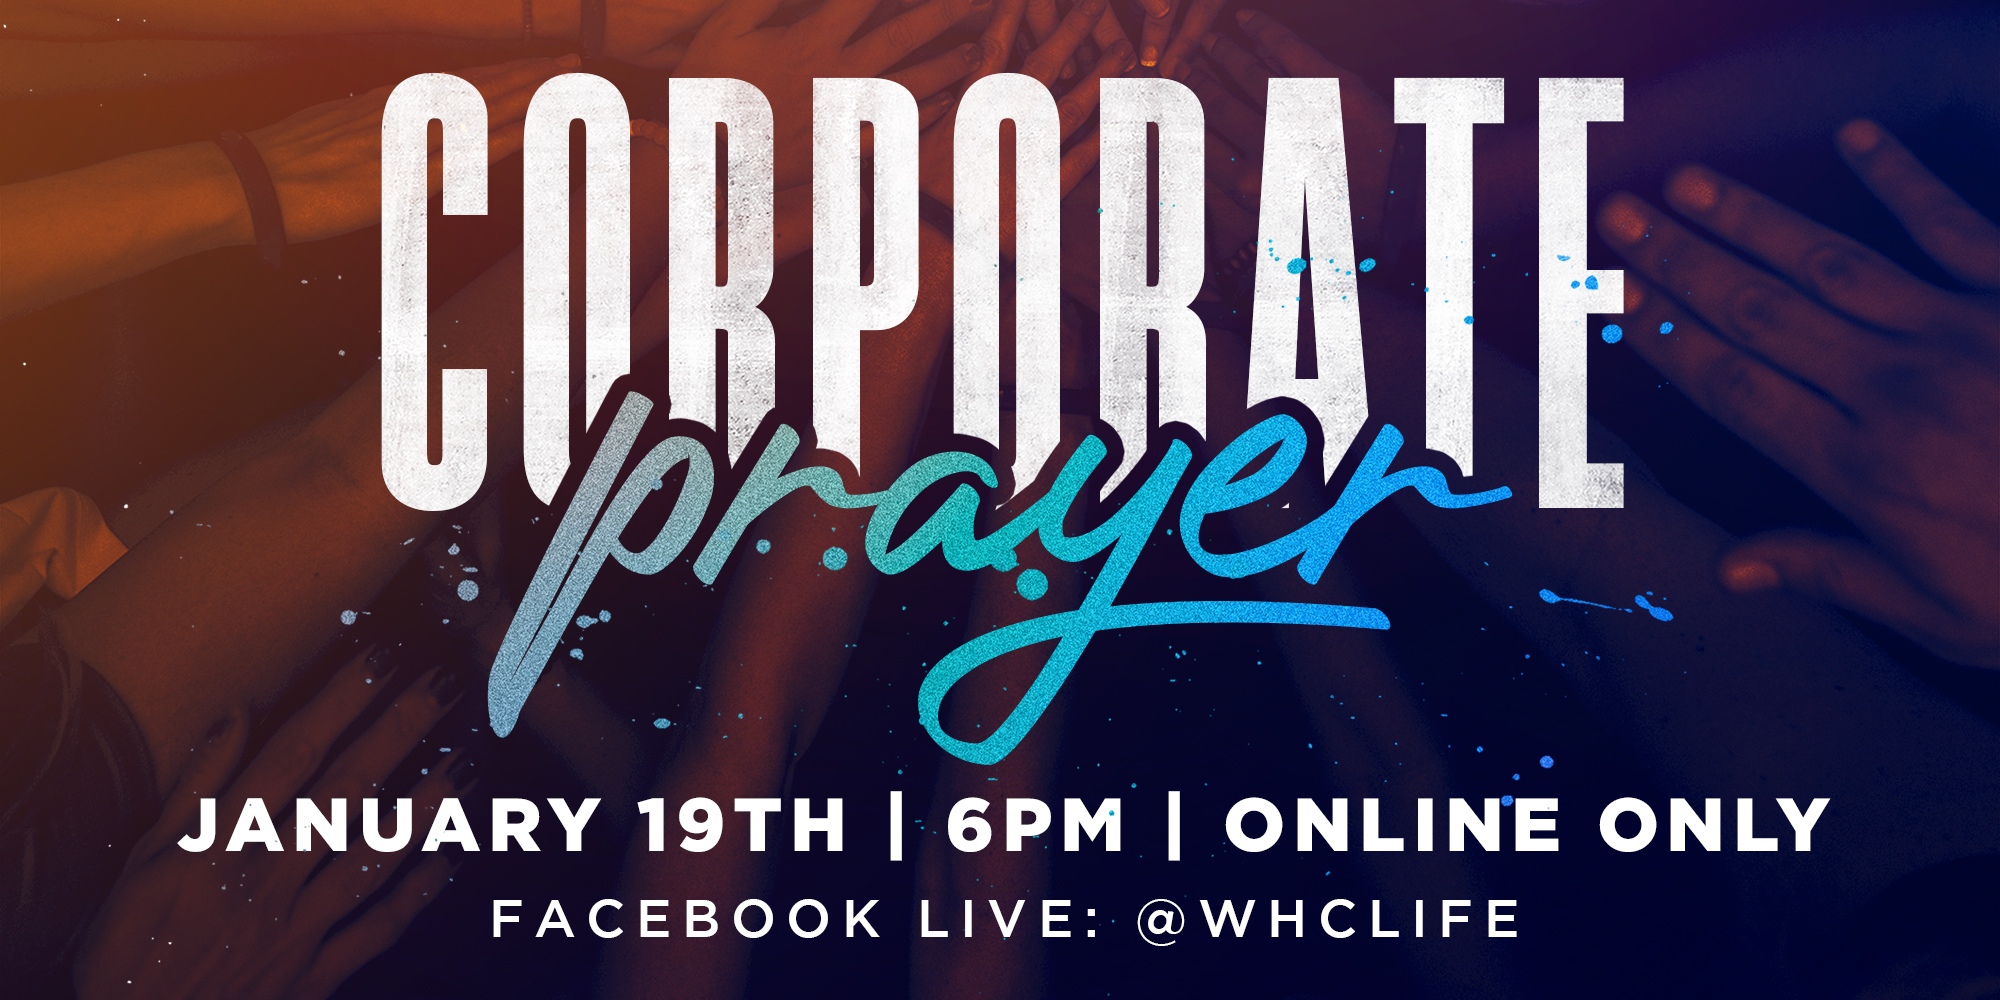 Corporate Prayer Beginning January 12th 6PM Facebook LIVE: @WHCLIFE